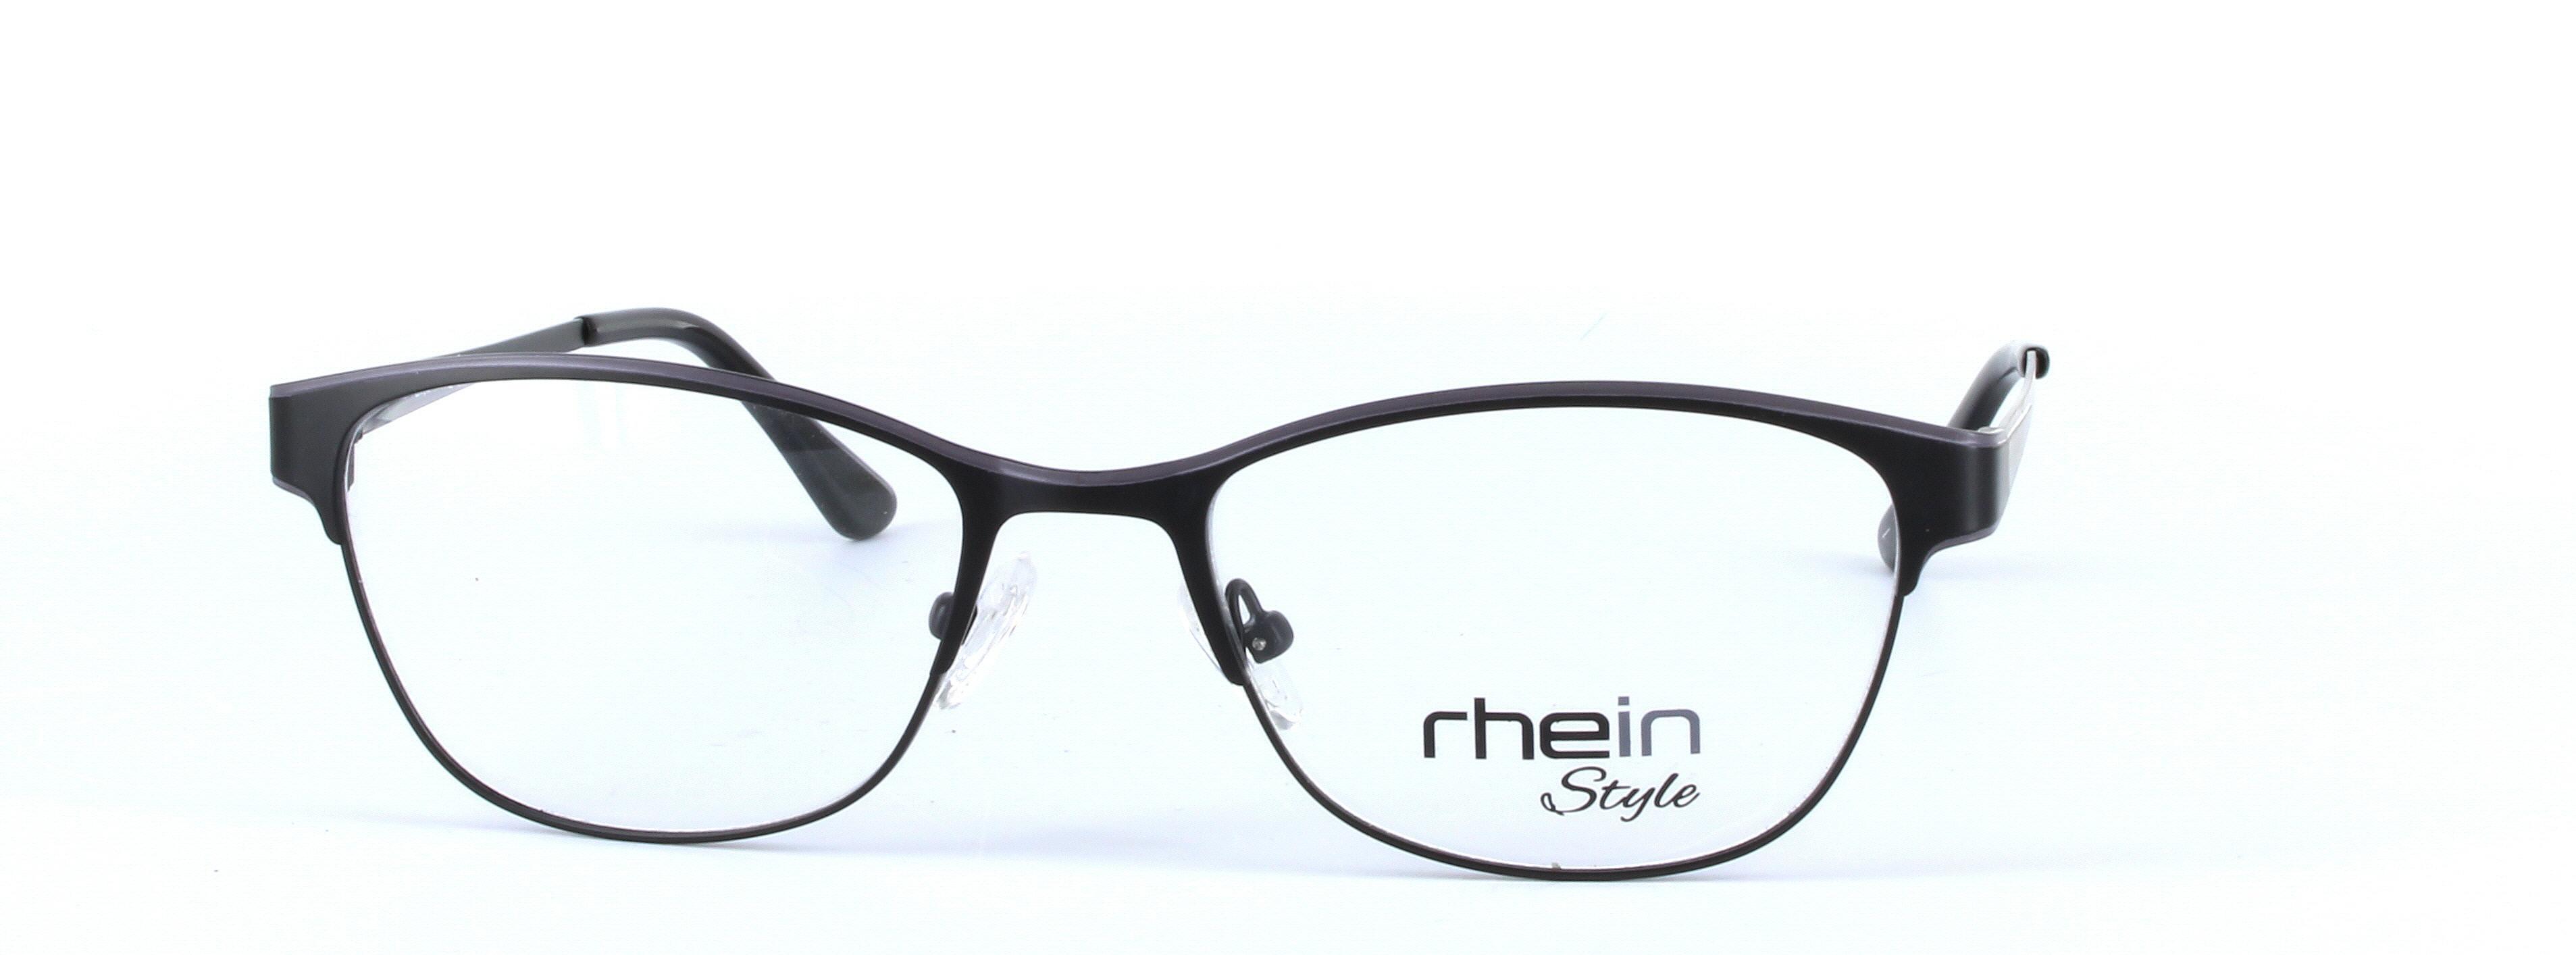 Harvey Black Full Rim Oval Metal Glasses - Image View 5